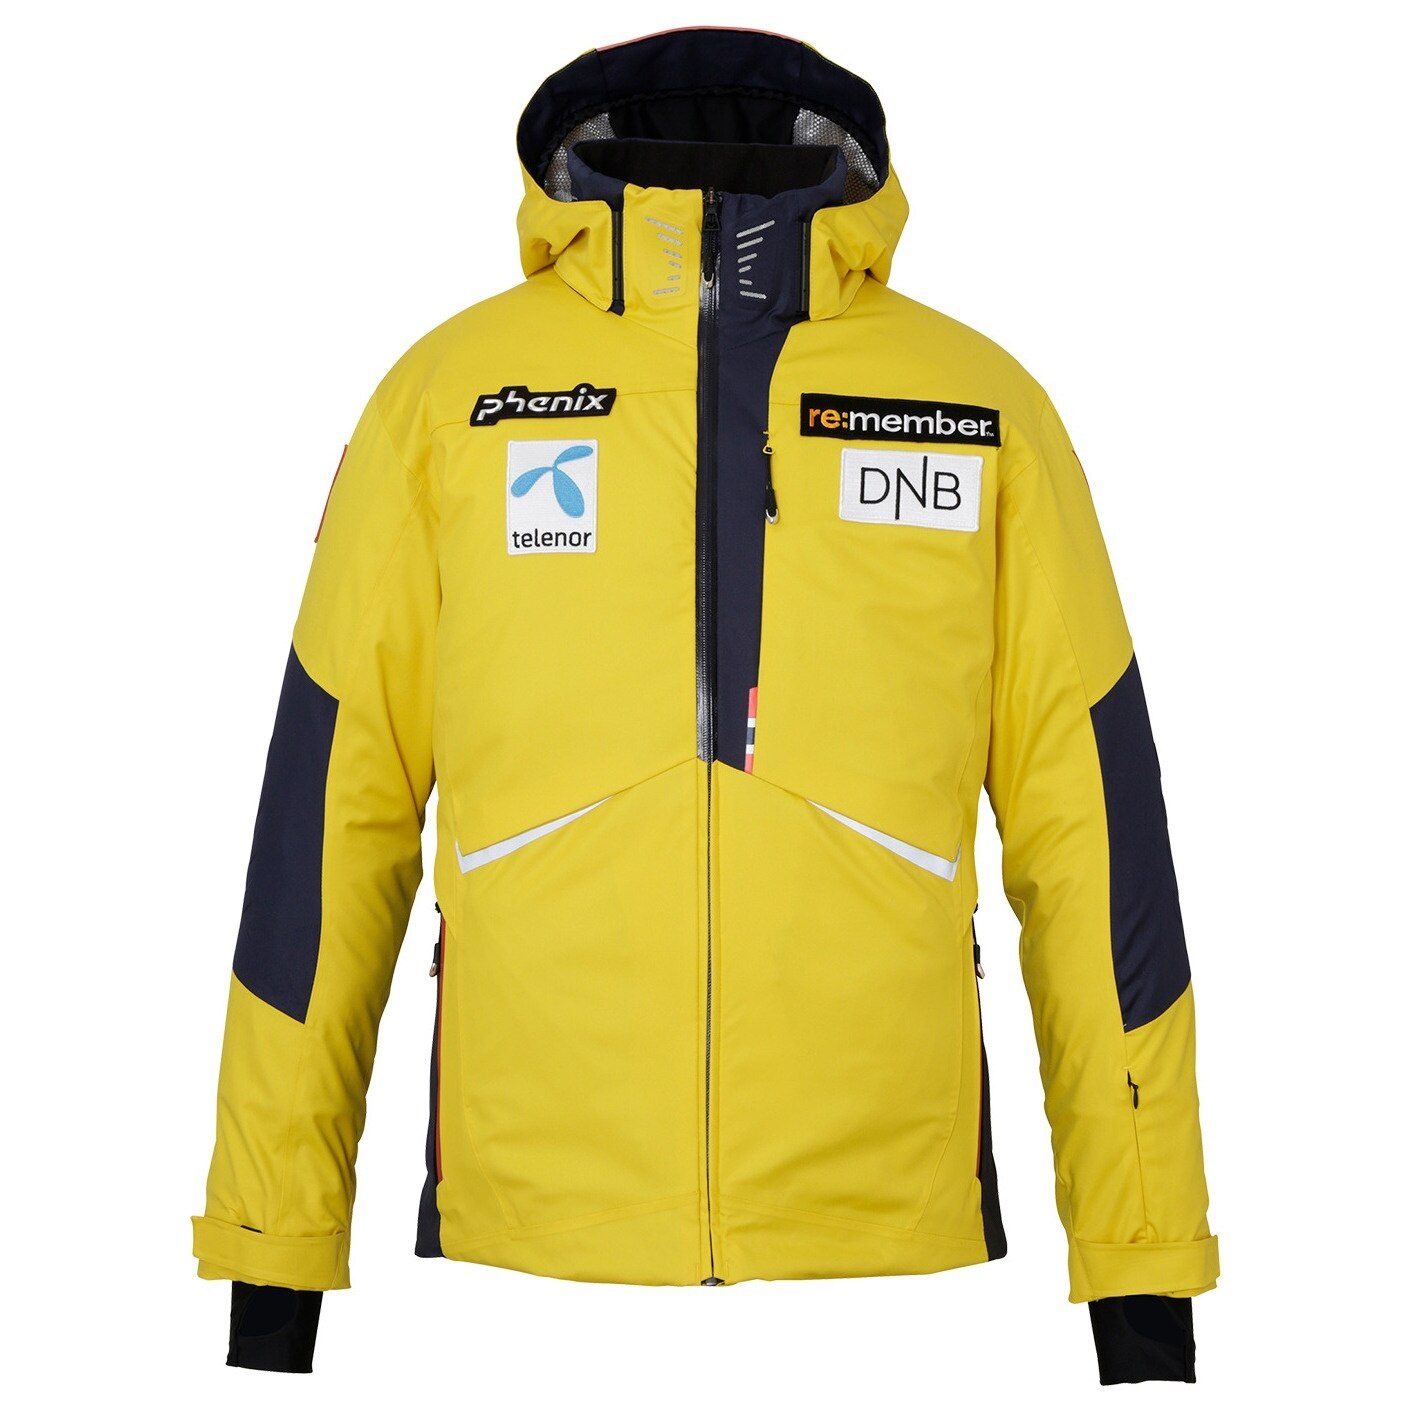 Phenix Men's Norway Alpine Team Ski Jacket on Sale - Powder7.com